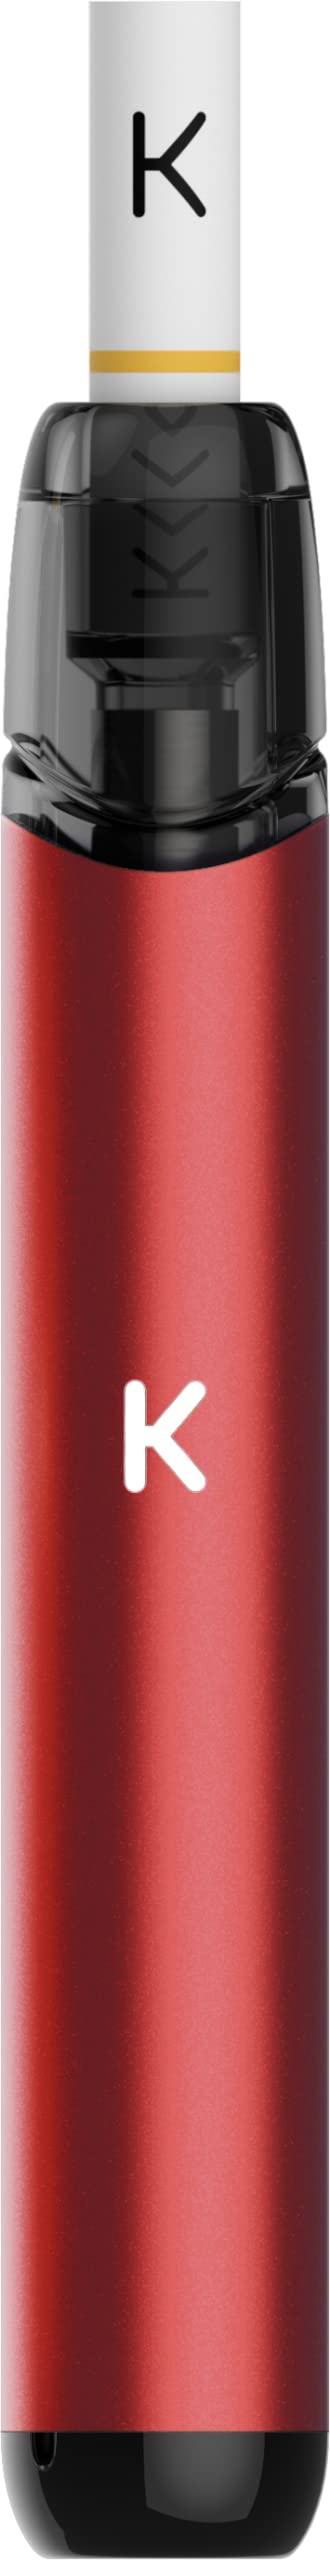 KIWI Pen, Elektronische Zigarette mit Pod System, 400mAh, 1,8 ml,ohne Nikotin, kein E-Liquid (Rooibos Tea)